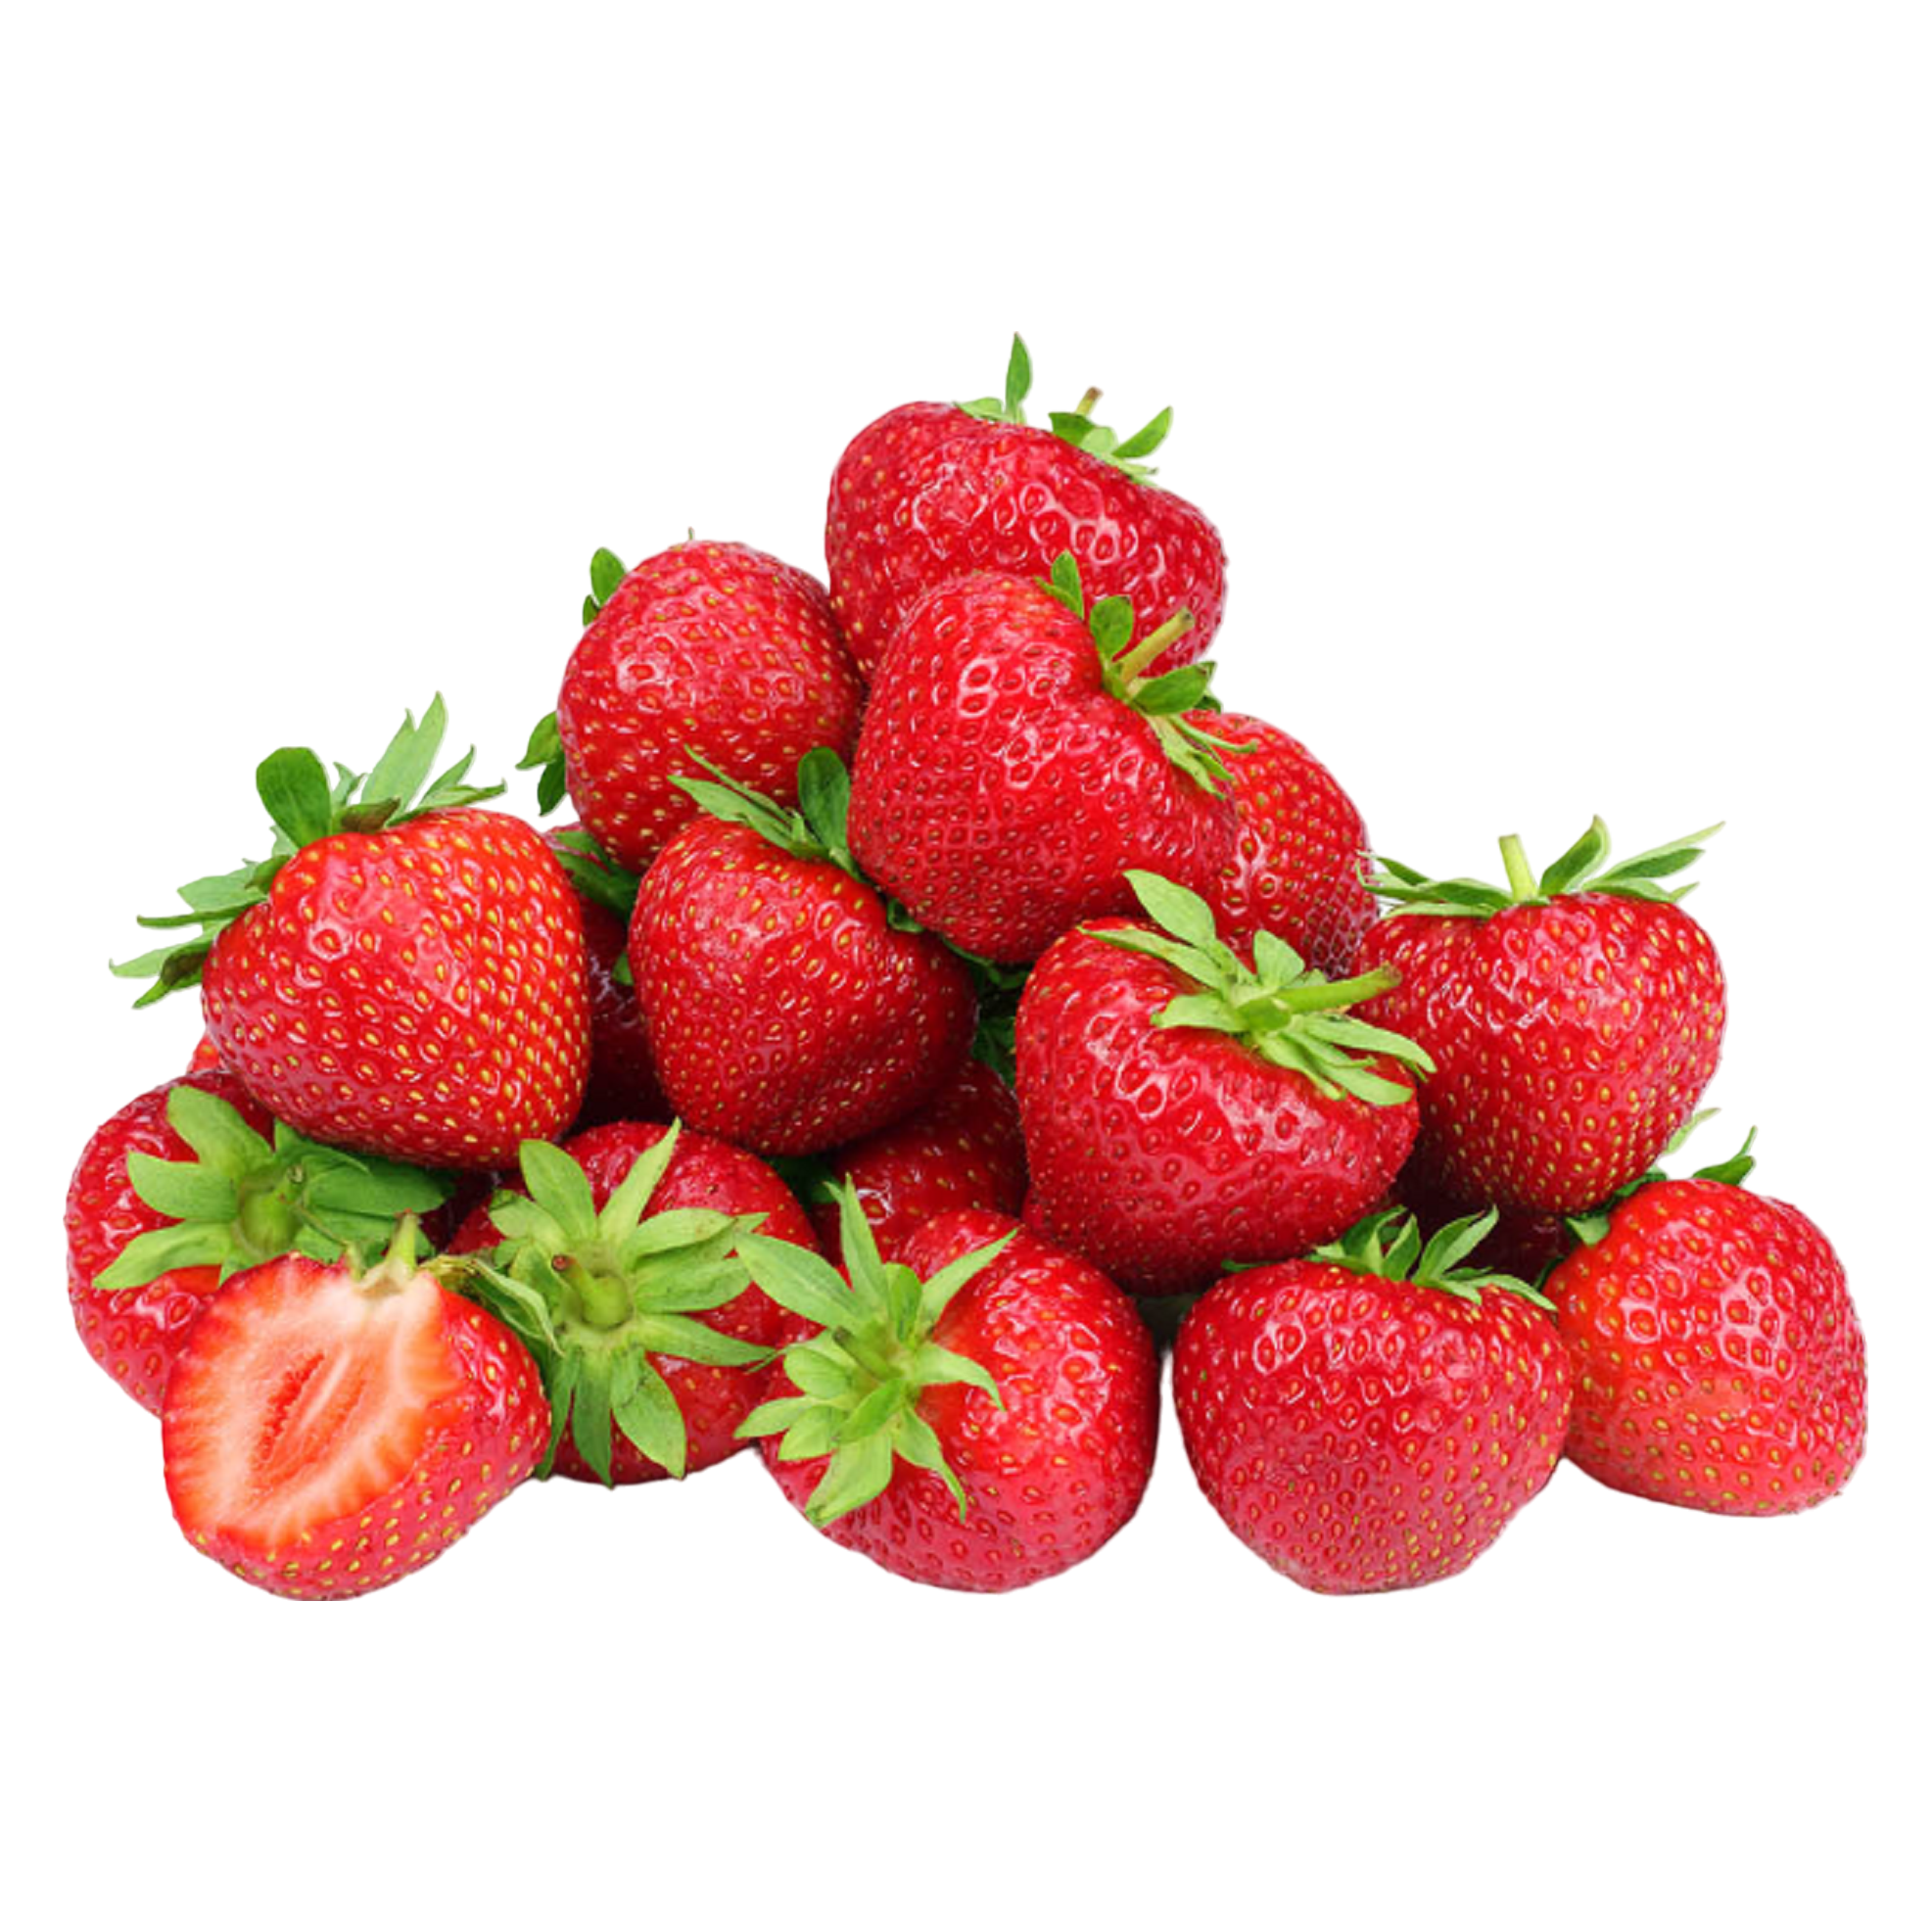 Strawberries - 1lb 